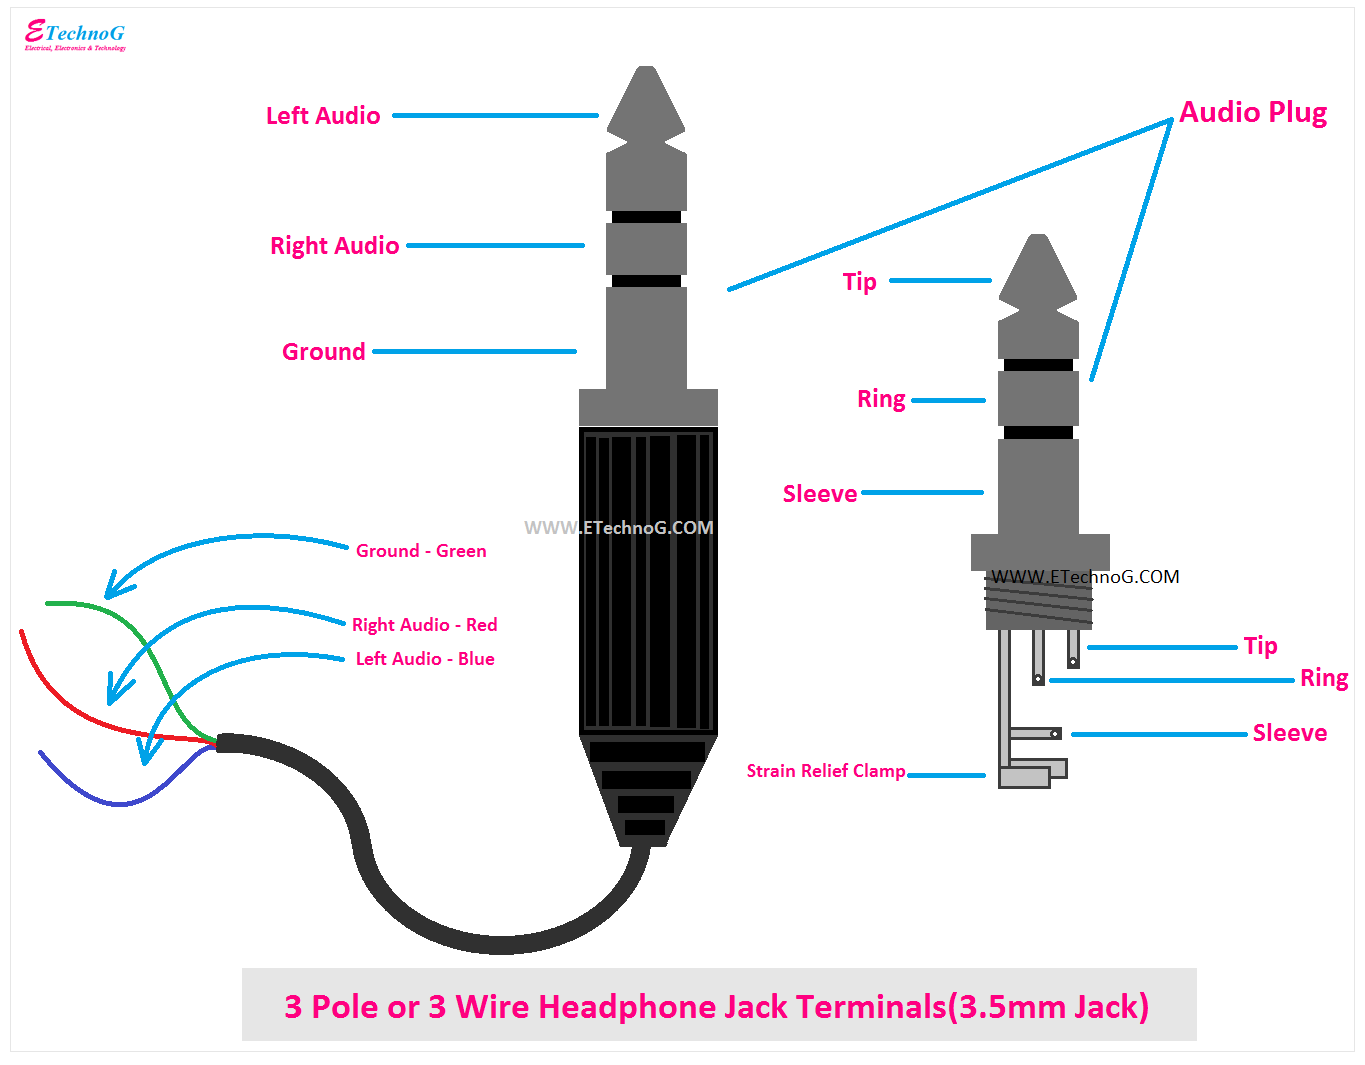 3 pole or 3 wire headphone jack terminals, TRS headphone jack